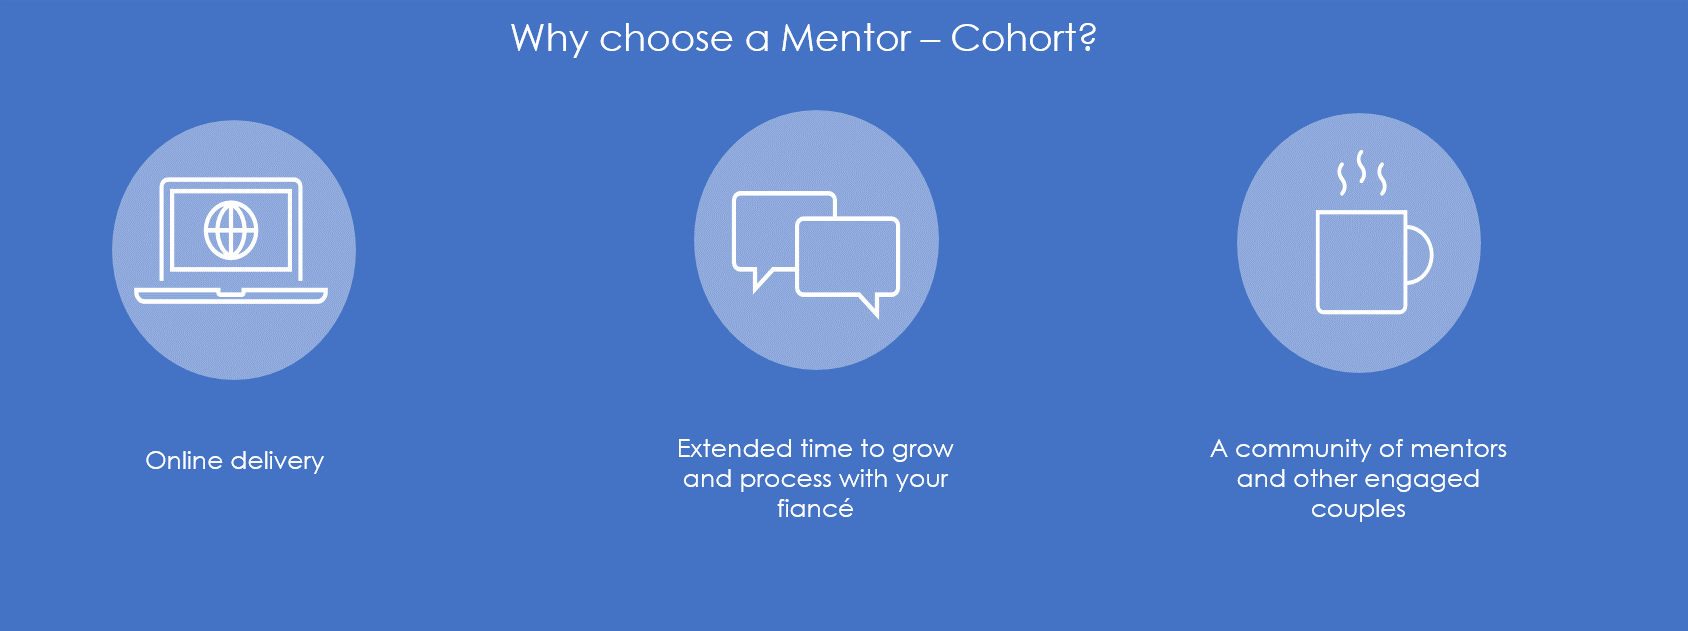 why mentor cohort